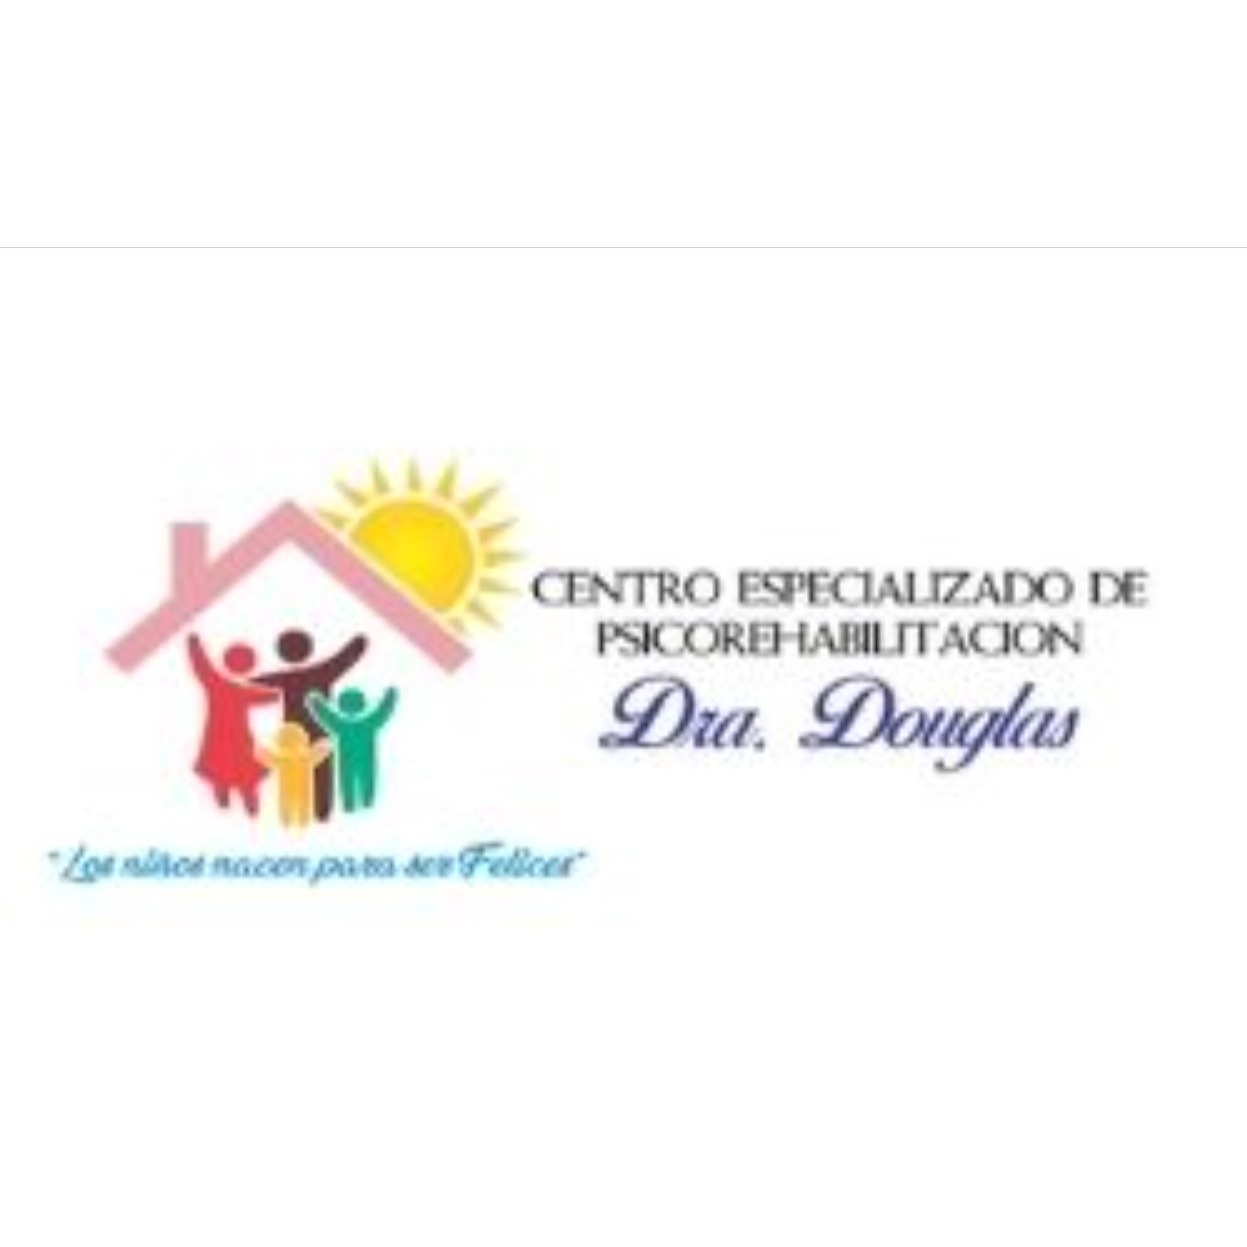 Clínica Dra. Douglas - Psychologist - La Chorrera - 253-1677 Panama | ShowMeLocal.com